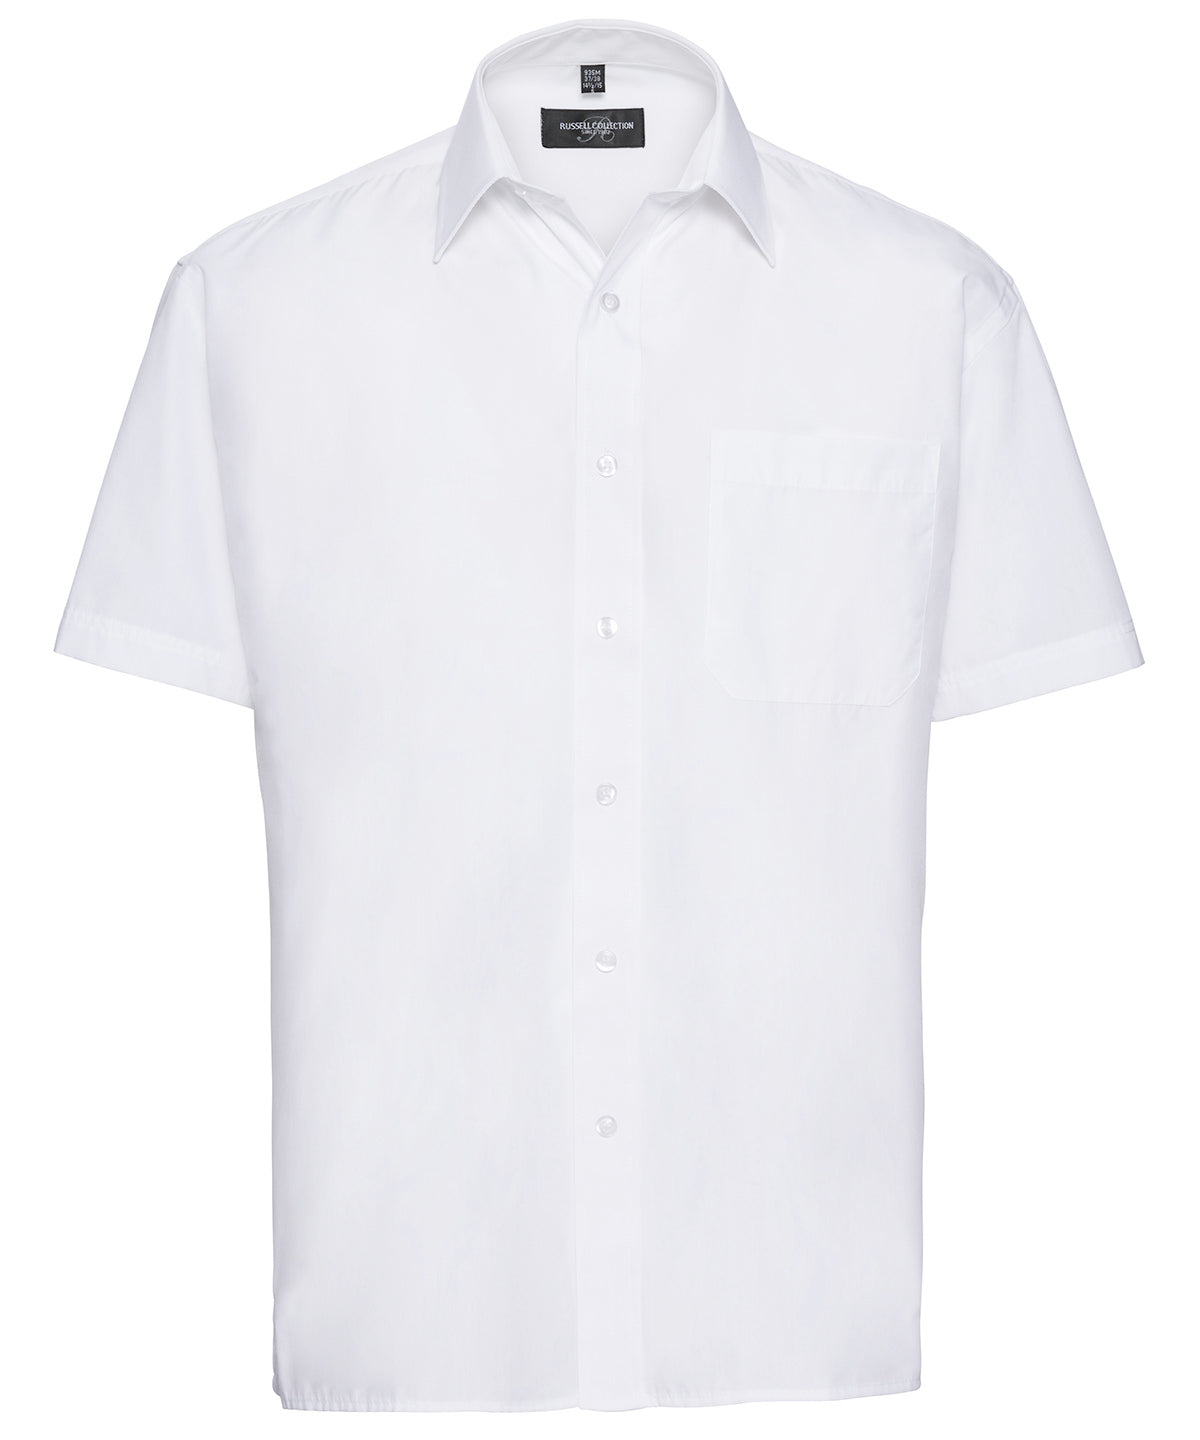 Bolir - Short Sleeve Polycotton Easycare Poplin Shirt